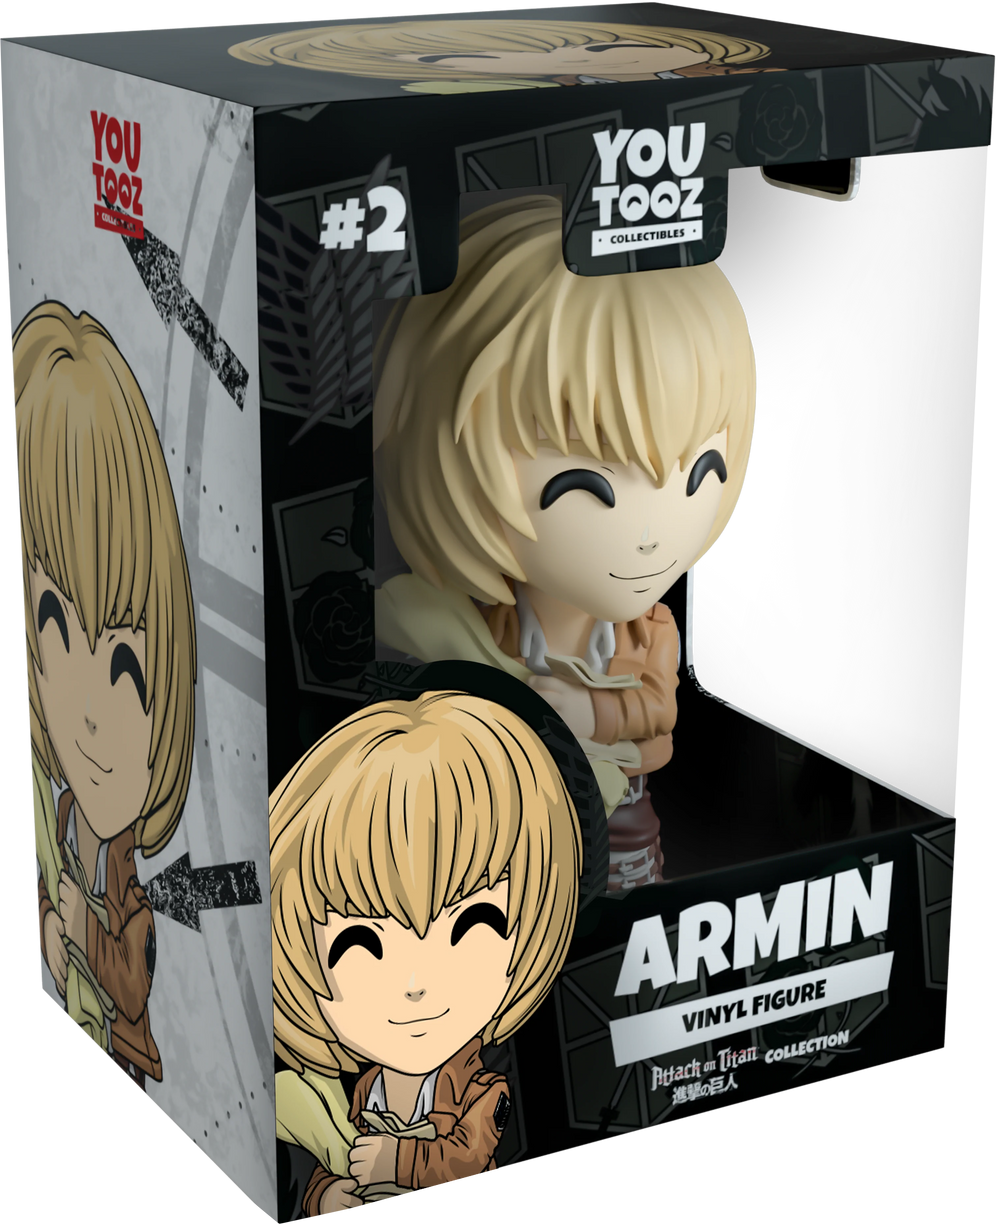 Youtooz Attack on Titan - Armin Vinyl Figure #2